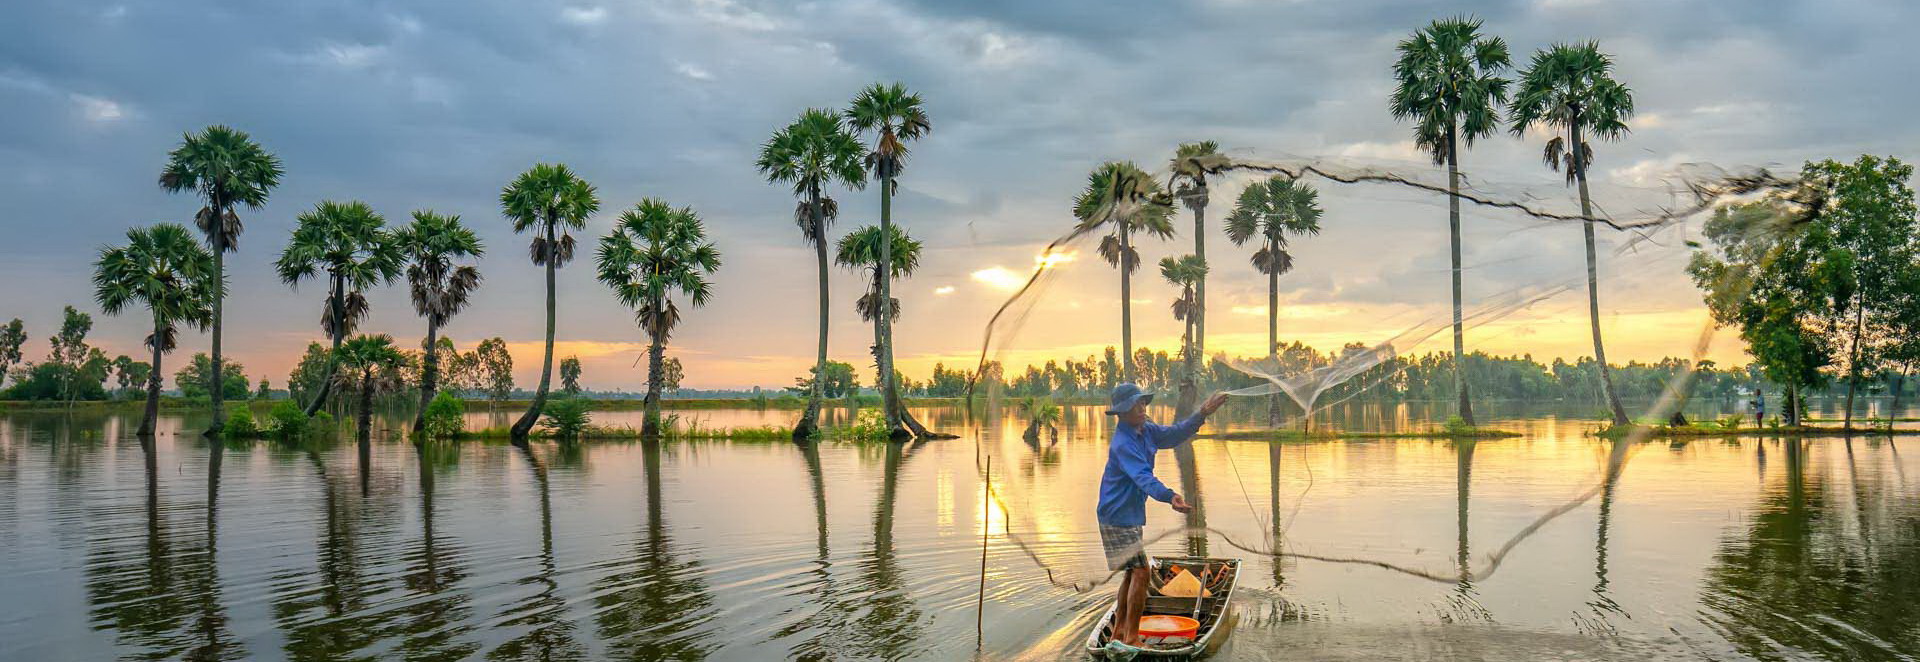 Mekong River BD